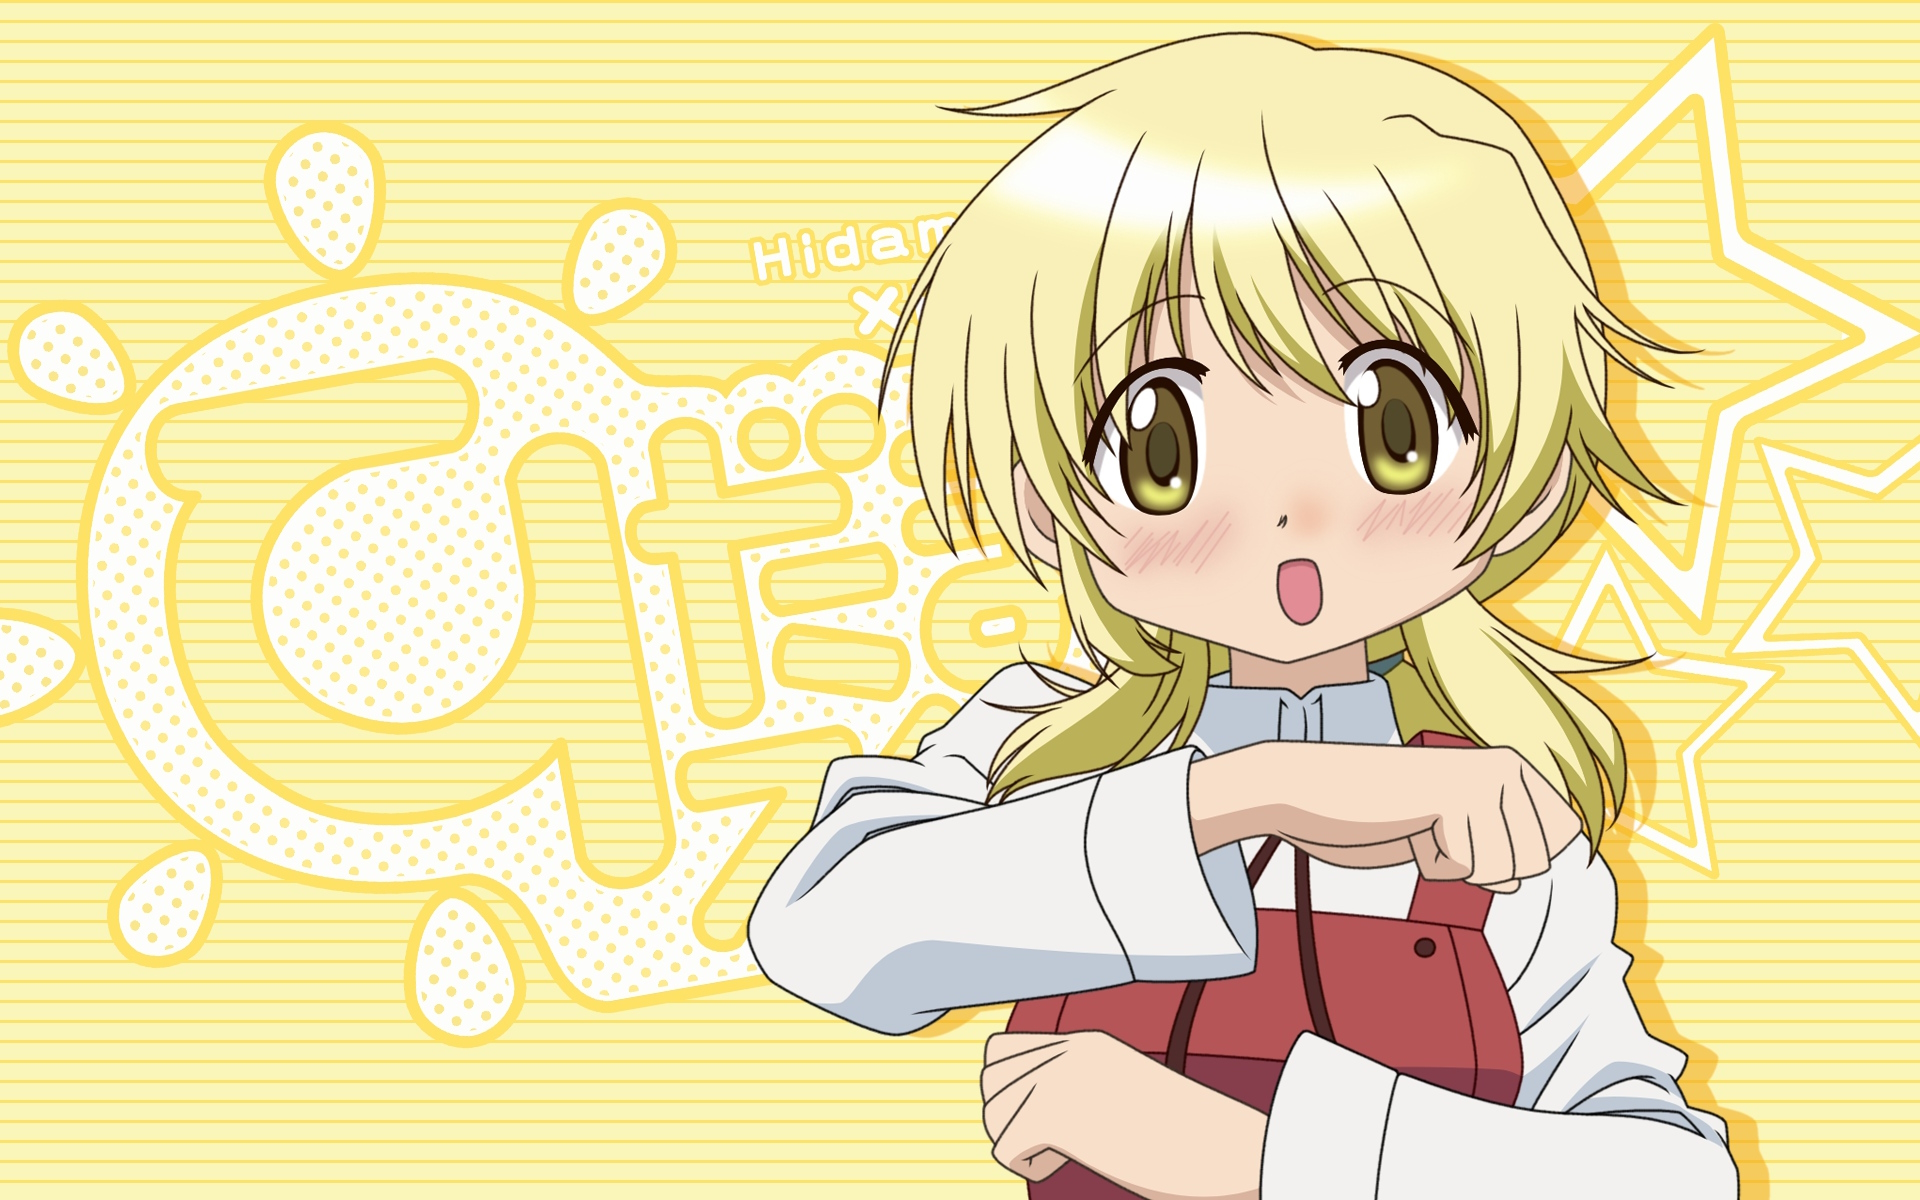 Hidamari Sketch  Episodes 13  Cuteness Overload  Chikorita157s Anime  Blog